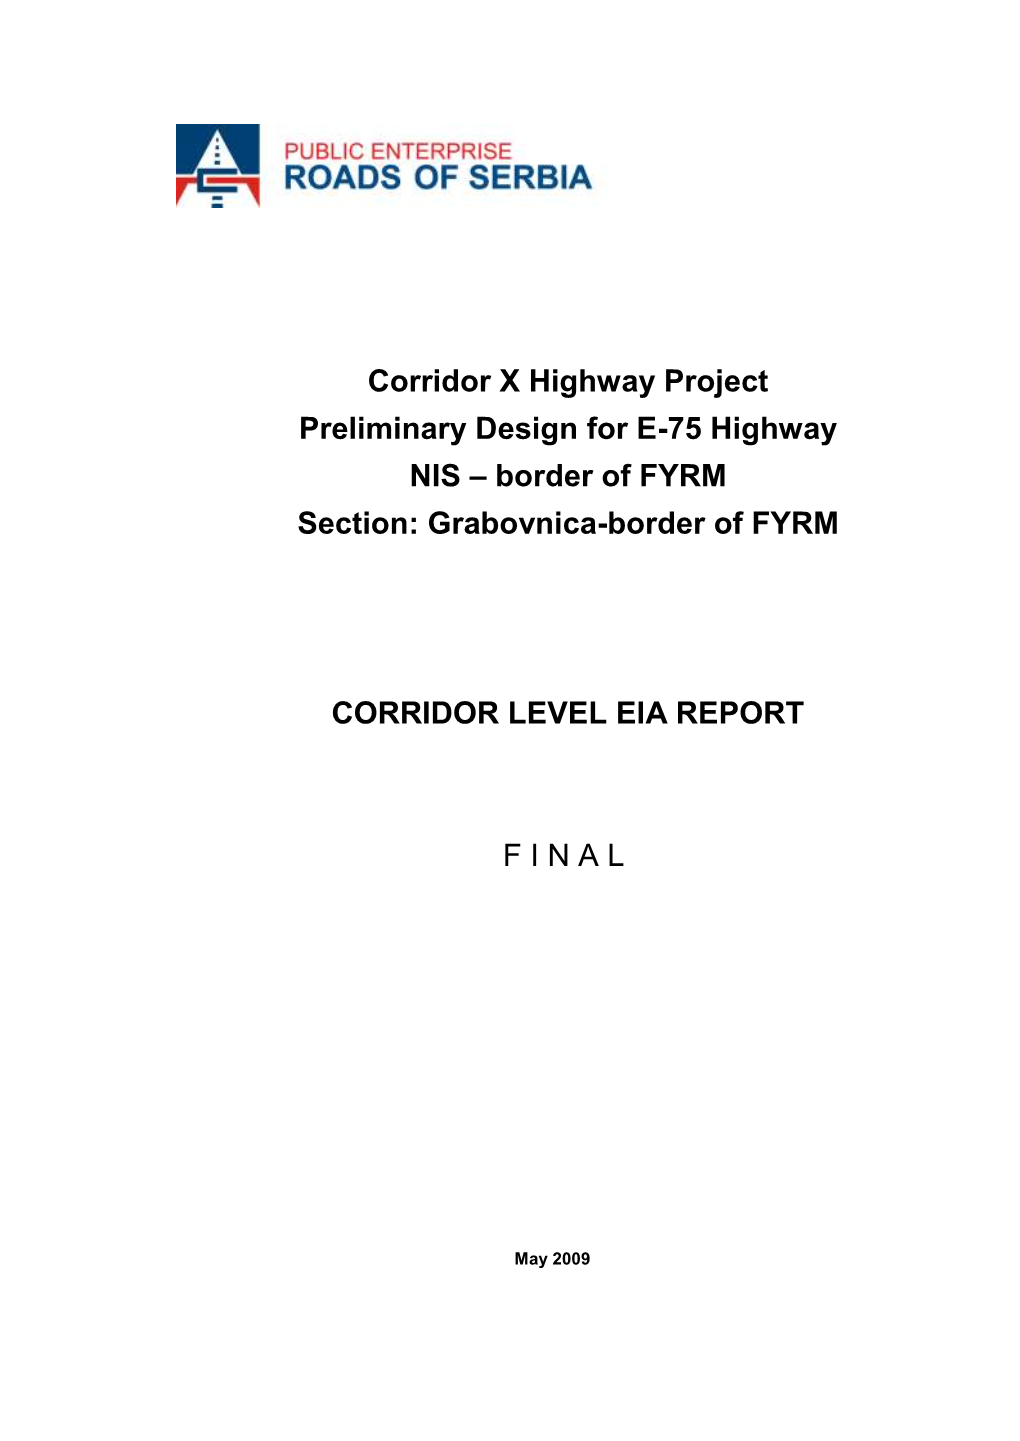 Corridor X Highway Project Preliminary Design for E-75 Highway NIS – Border of FYRM Section: Grabovnica-Border of FYRM